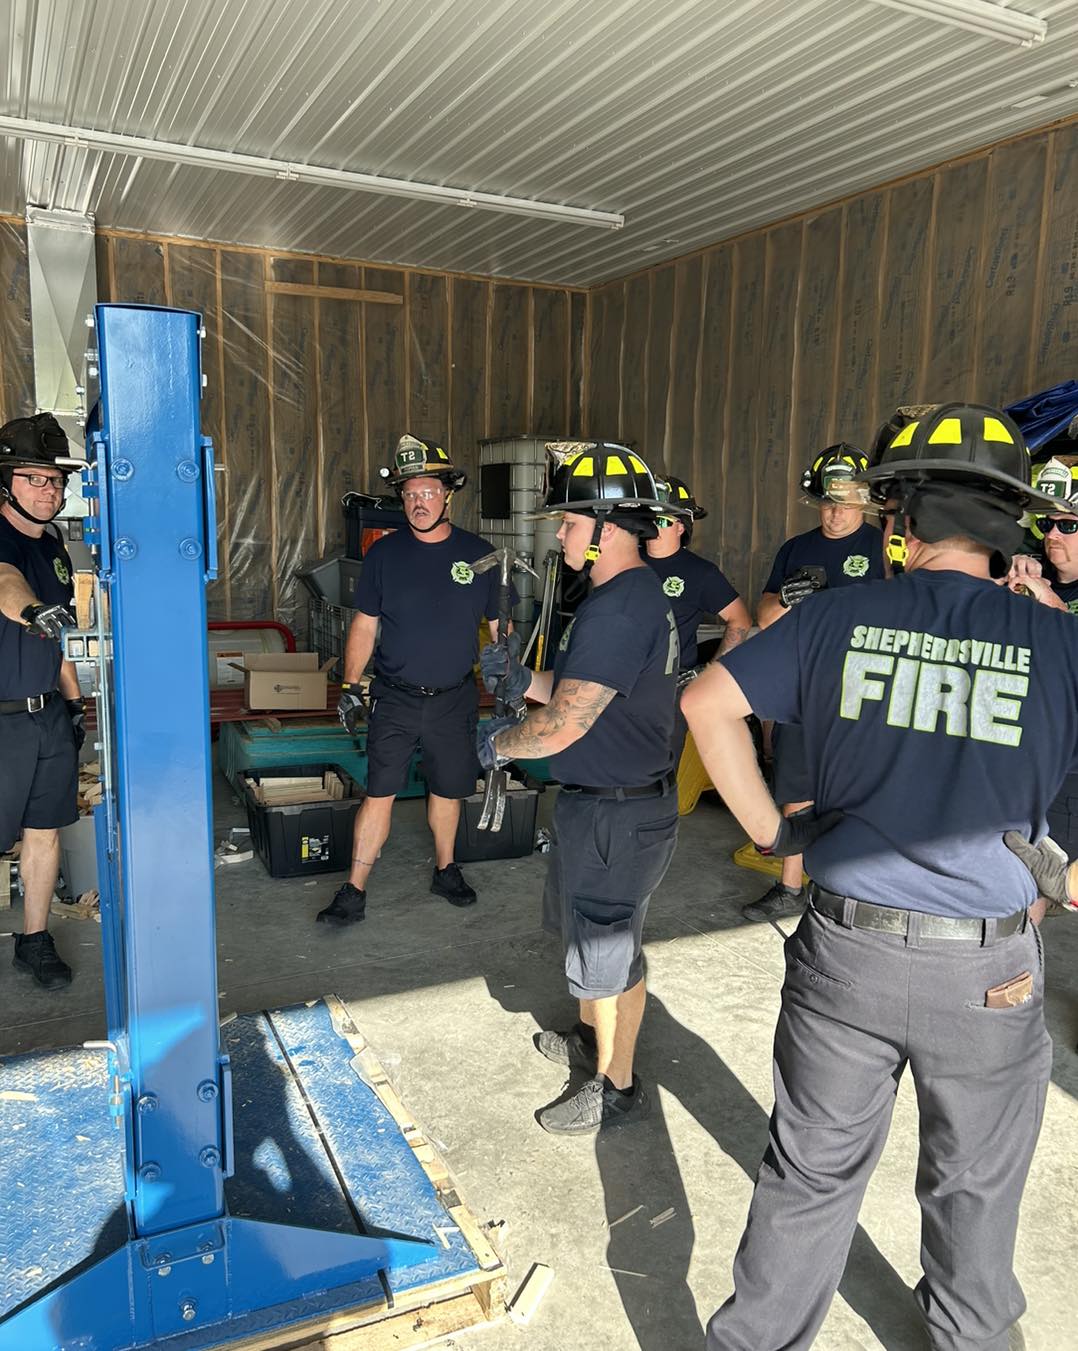 City of Shepherdsville fire department training